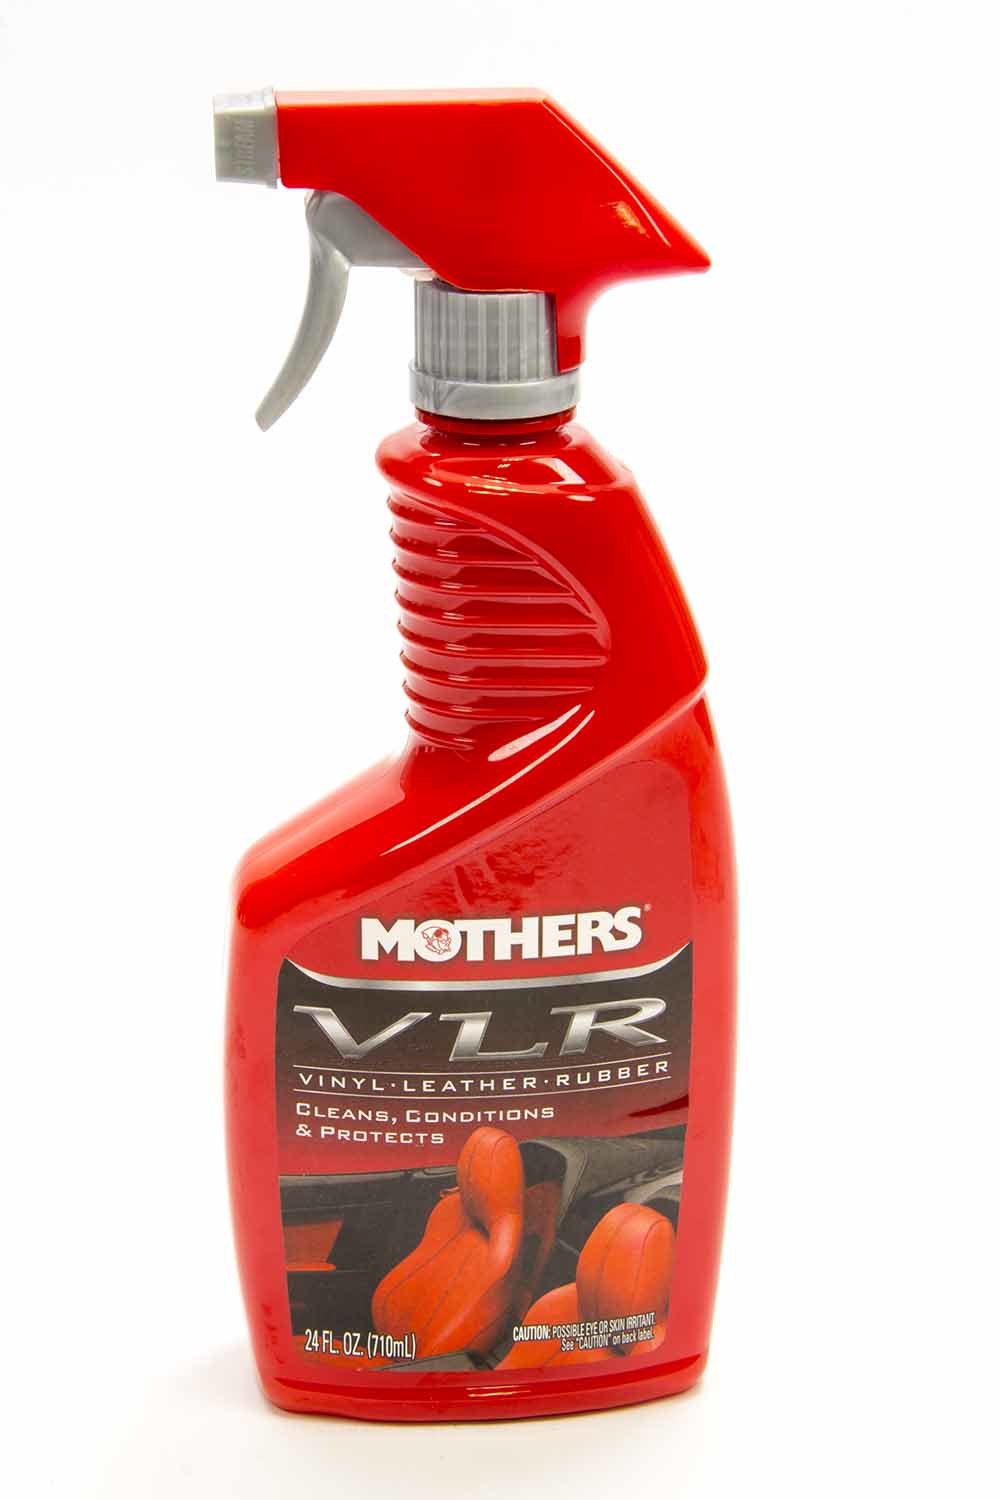 MOTHERS Interior Protectant, VLR, 24 oz Spray Bottle, Each